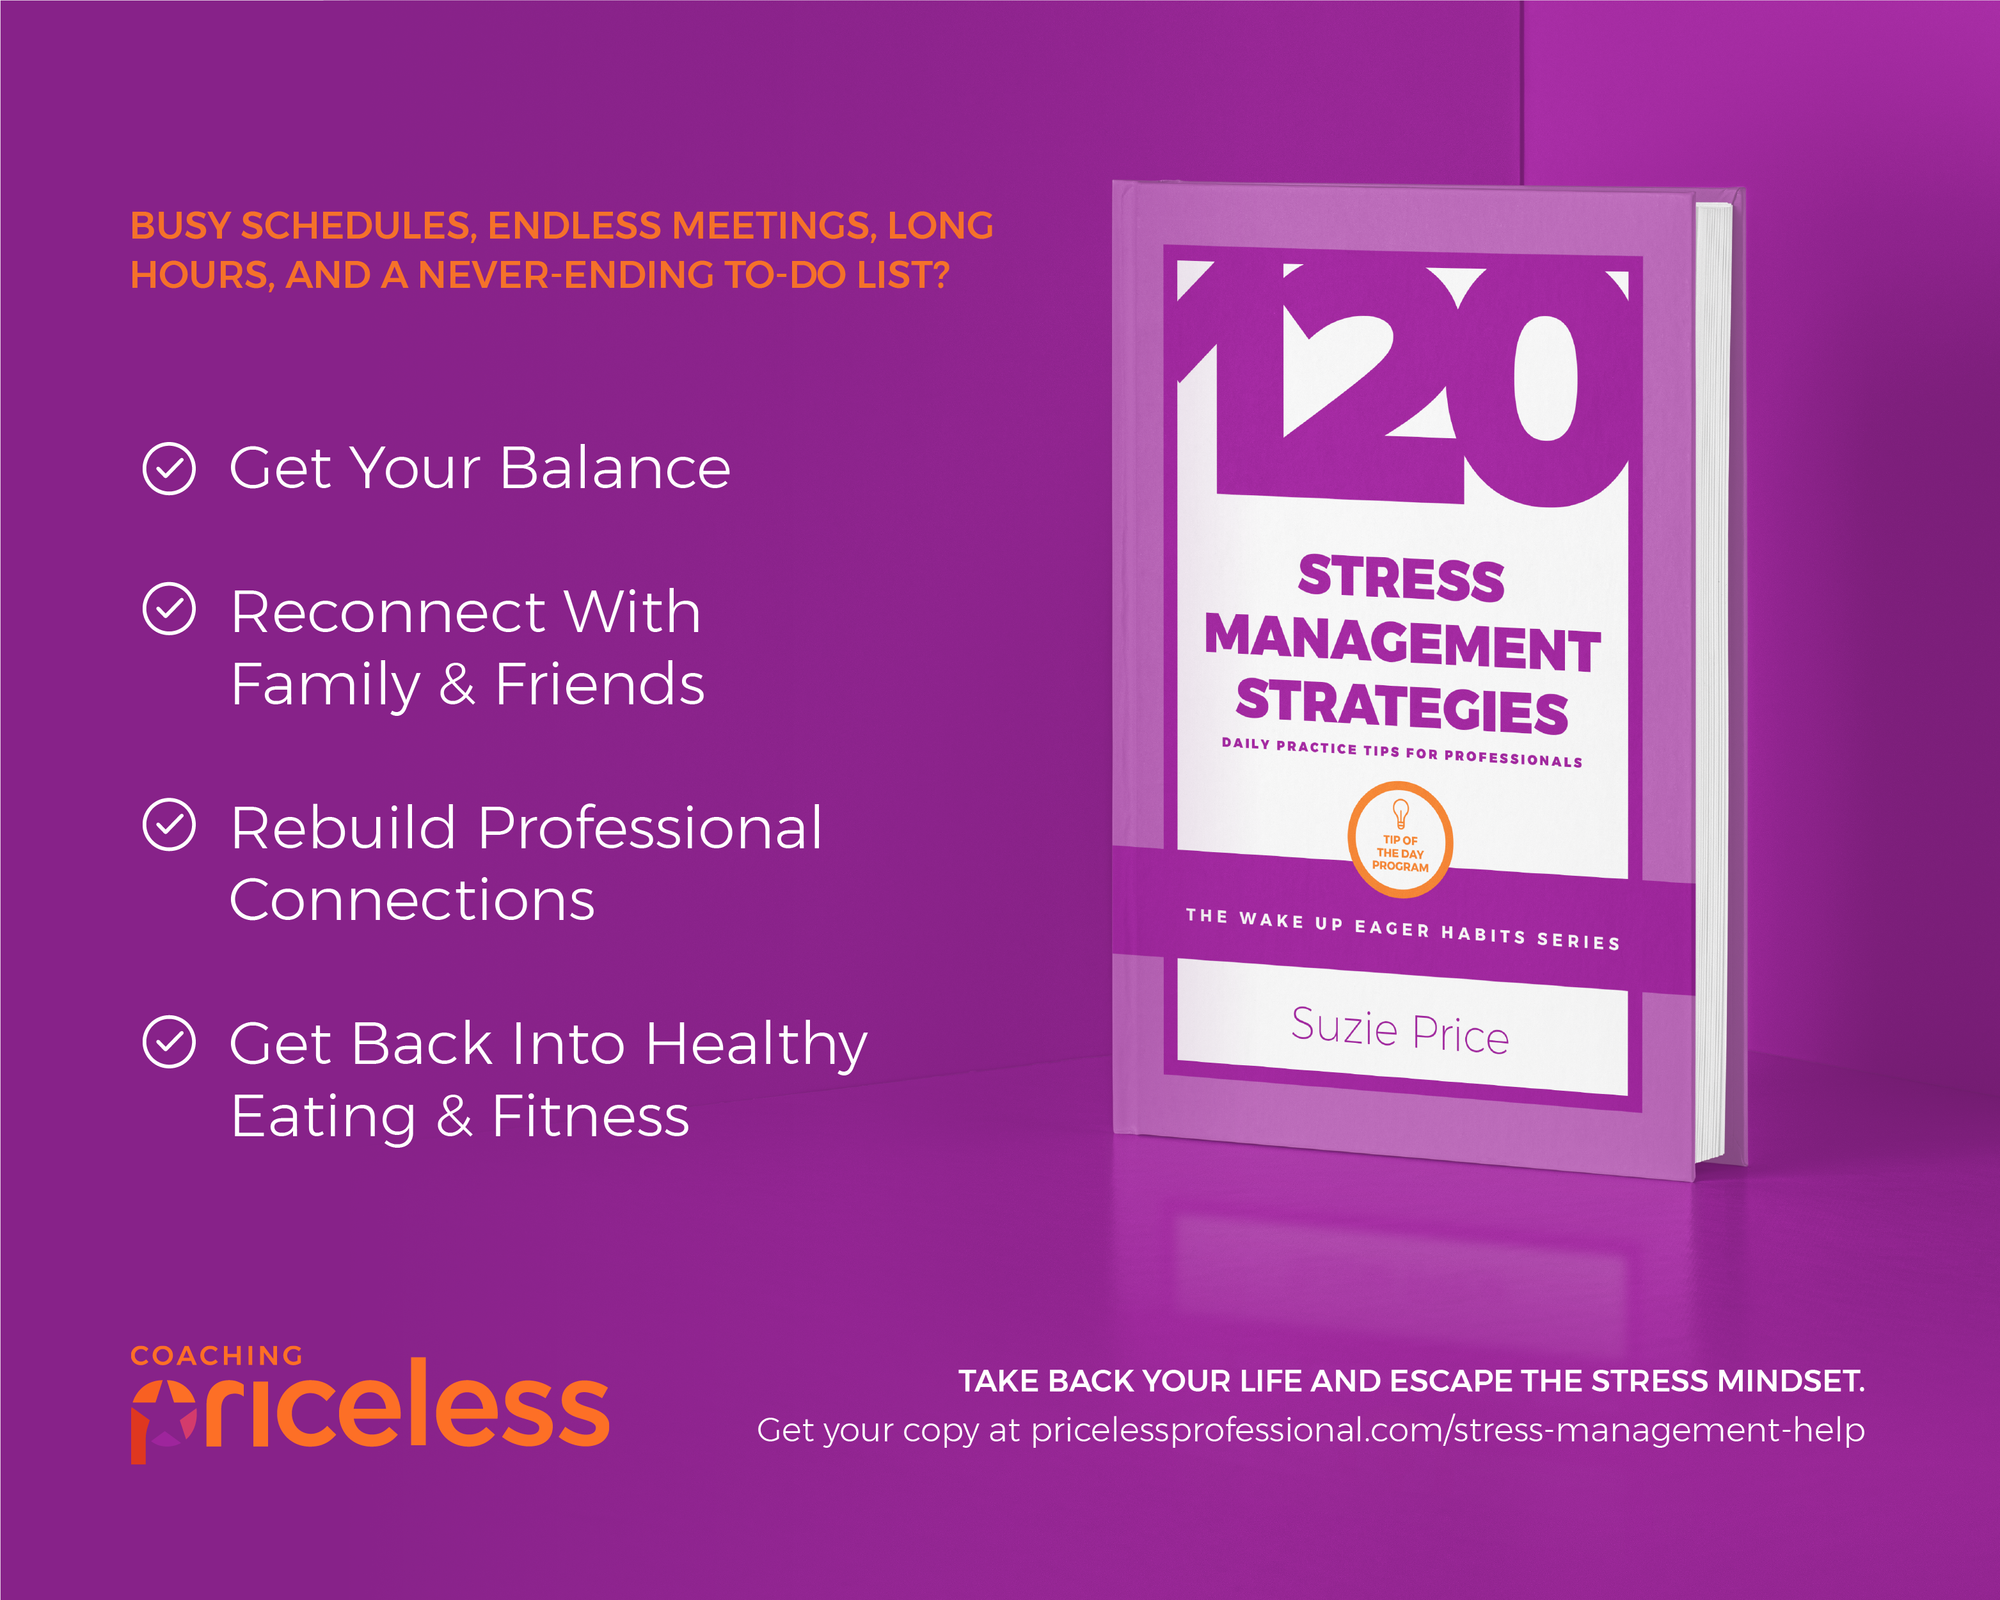 120 Stress Book Download